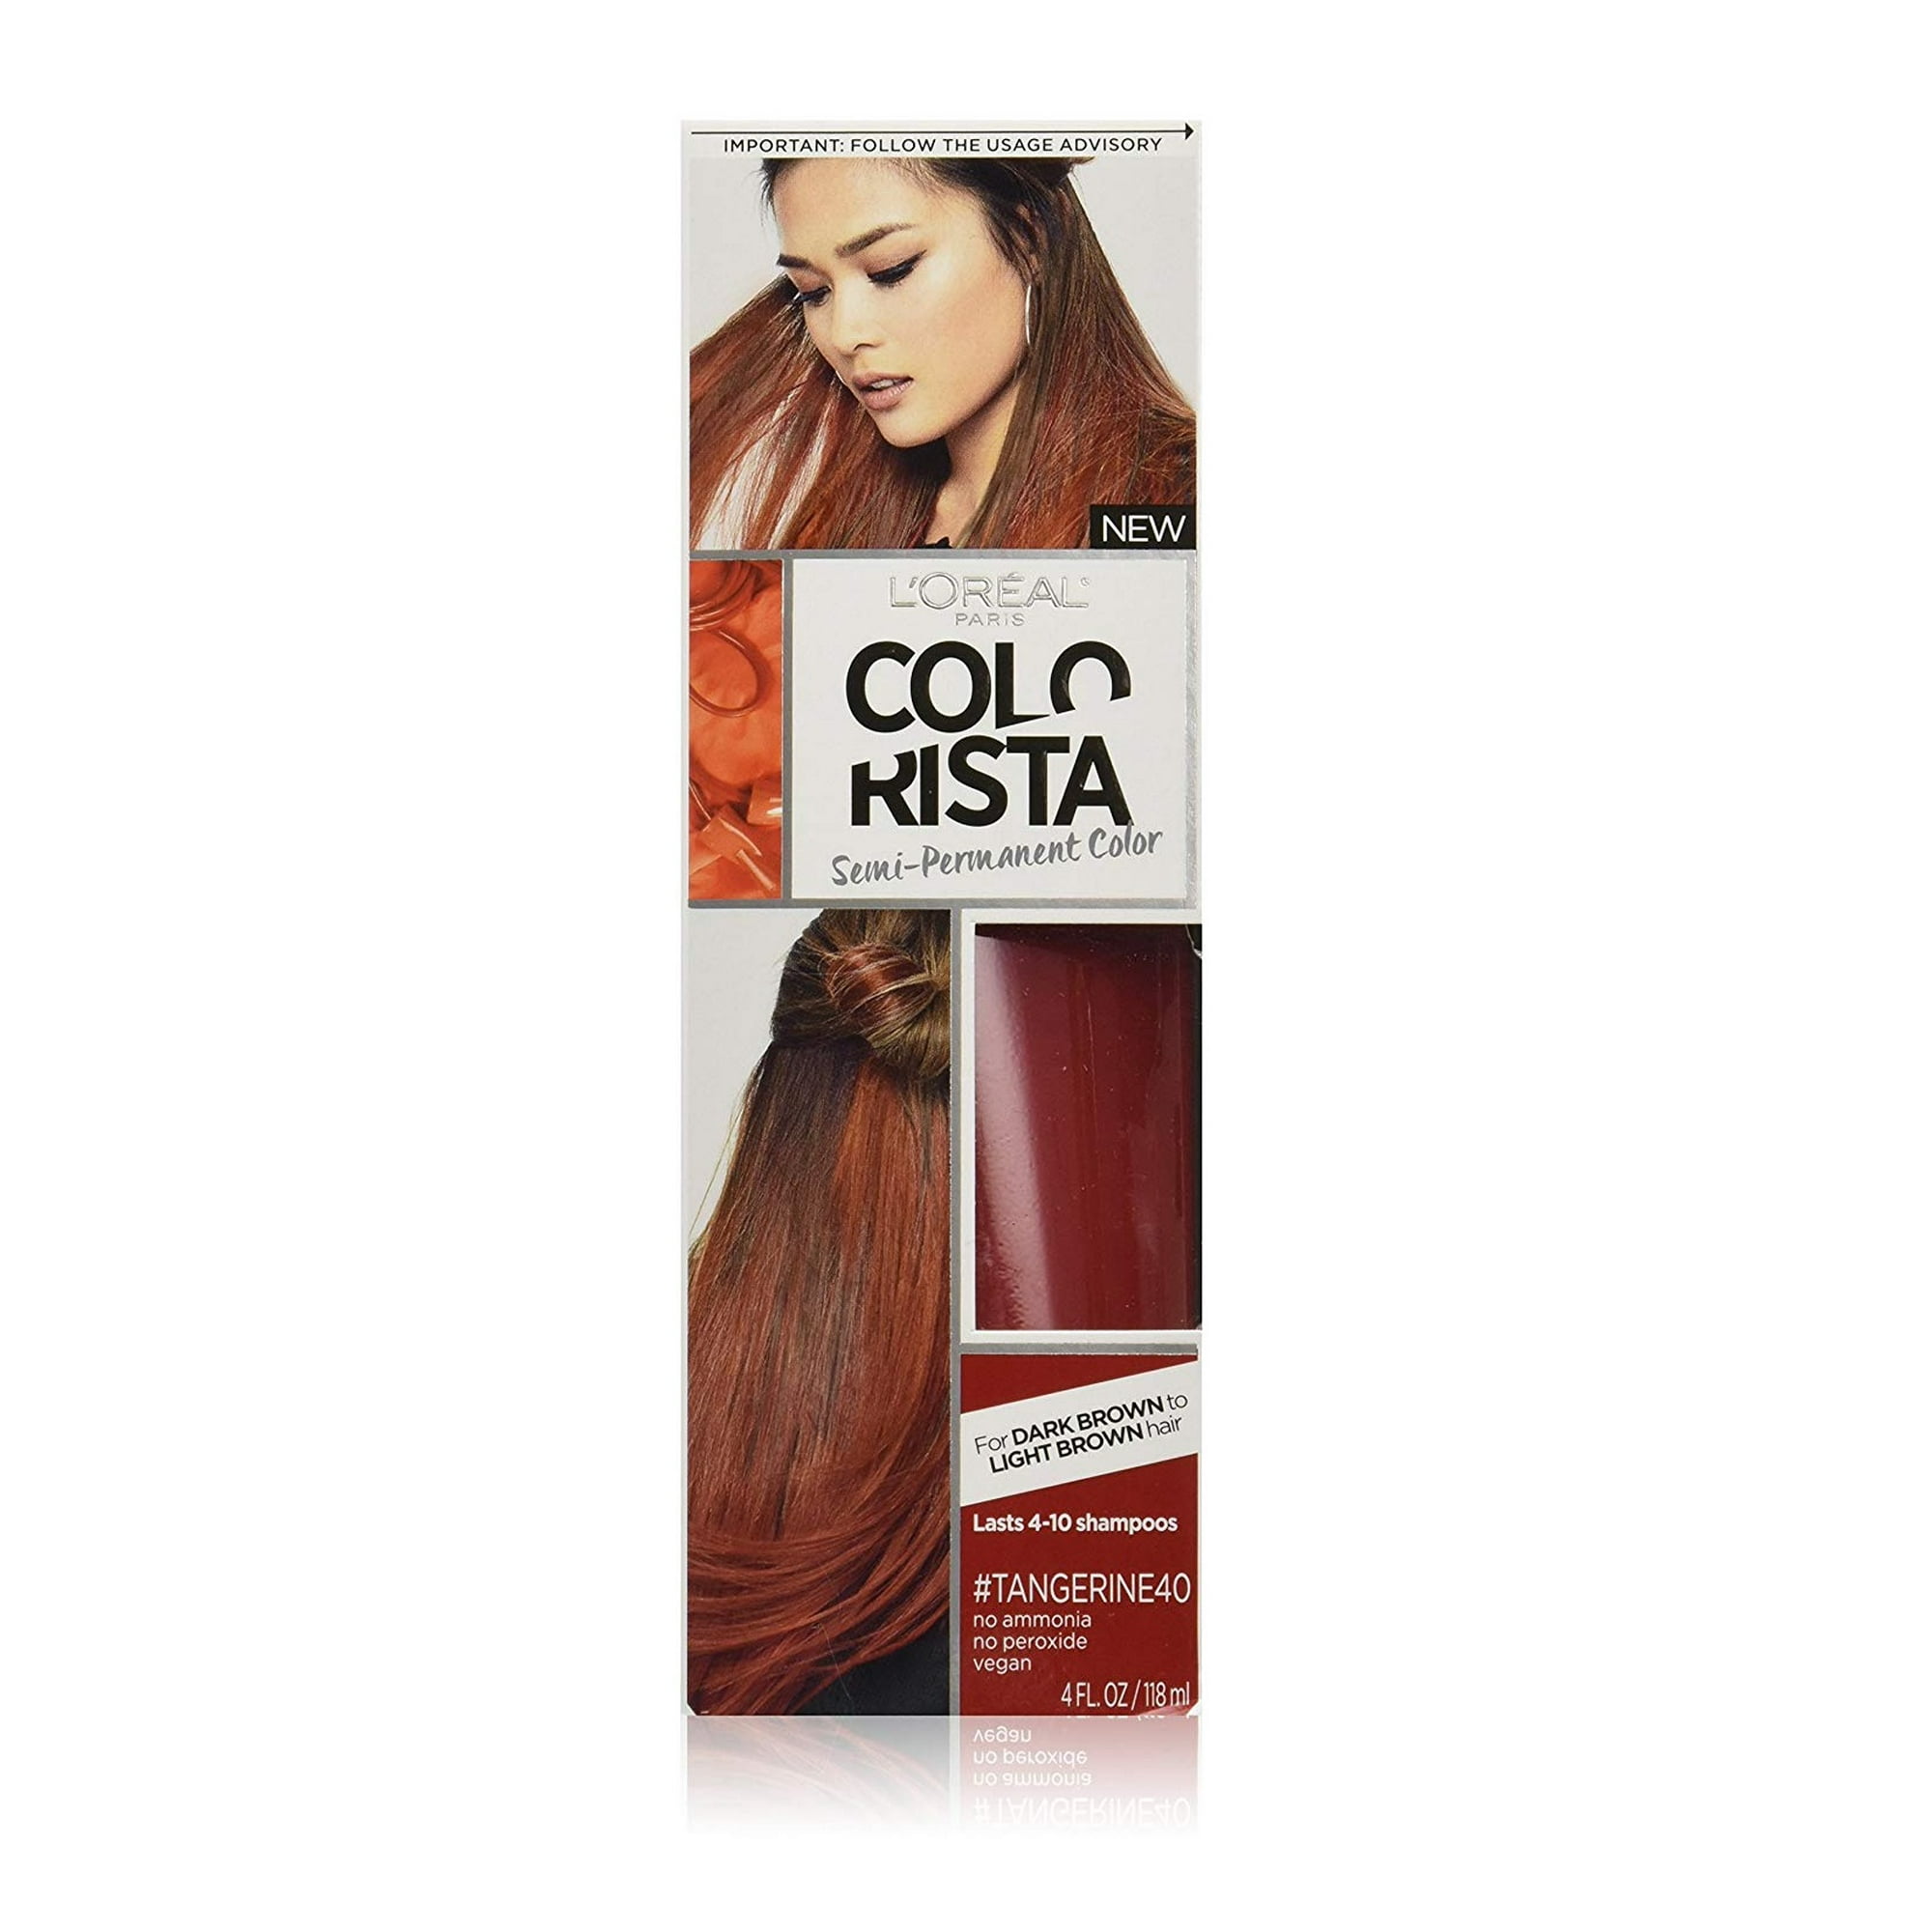 L'Oreal Colorista Semi-Permanent Hair Color, No Ammonia, No Peroxide, Vegan  #Tangerine40 | Walmart Canada